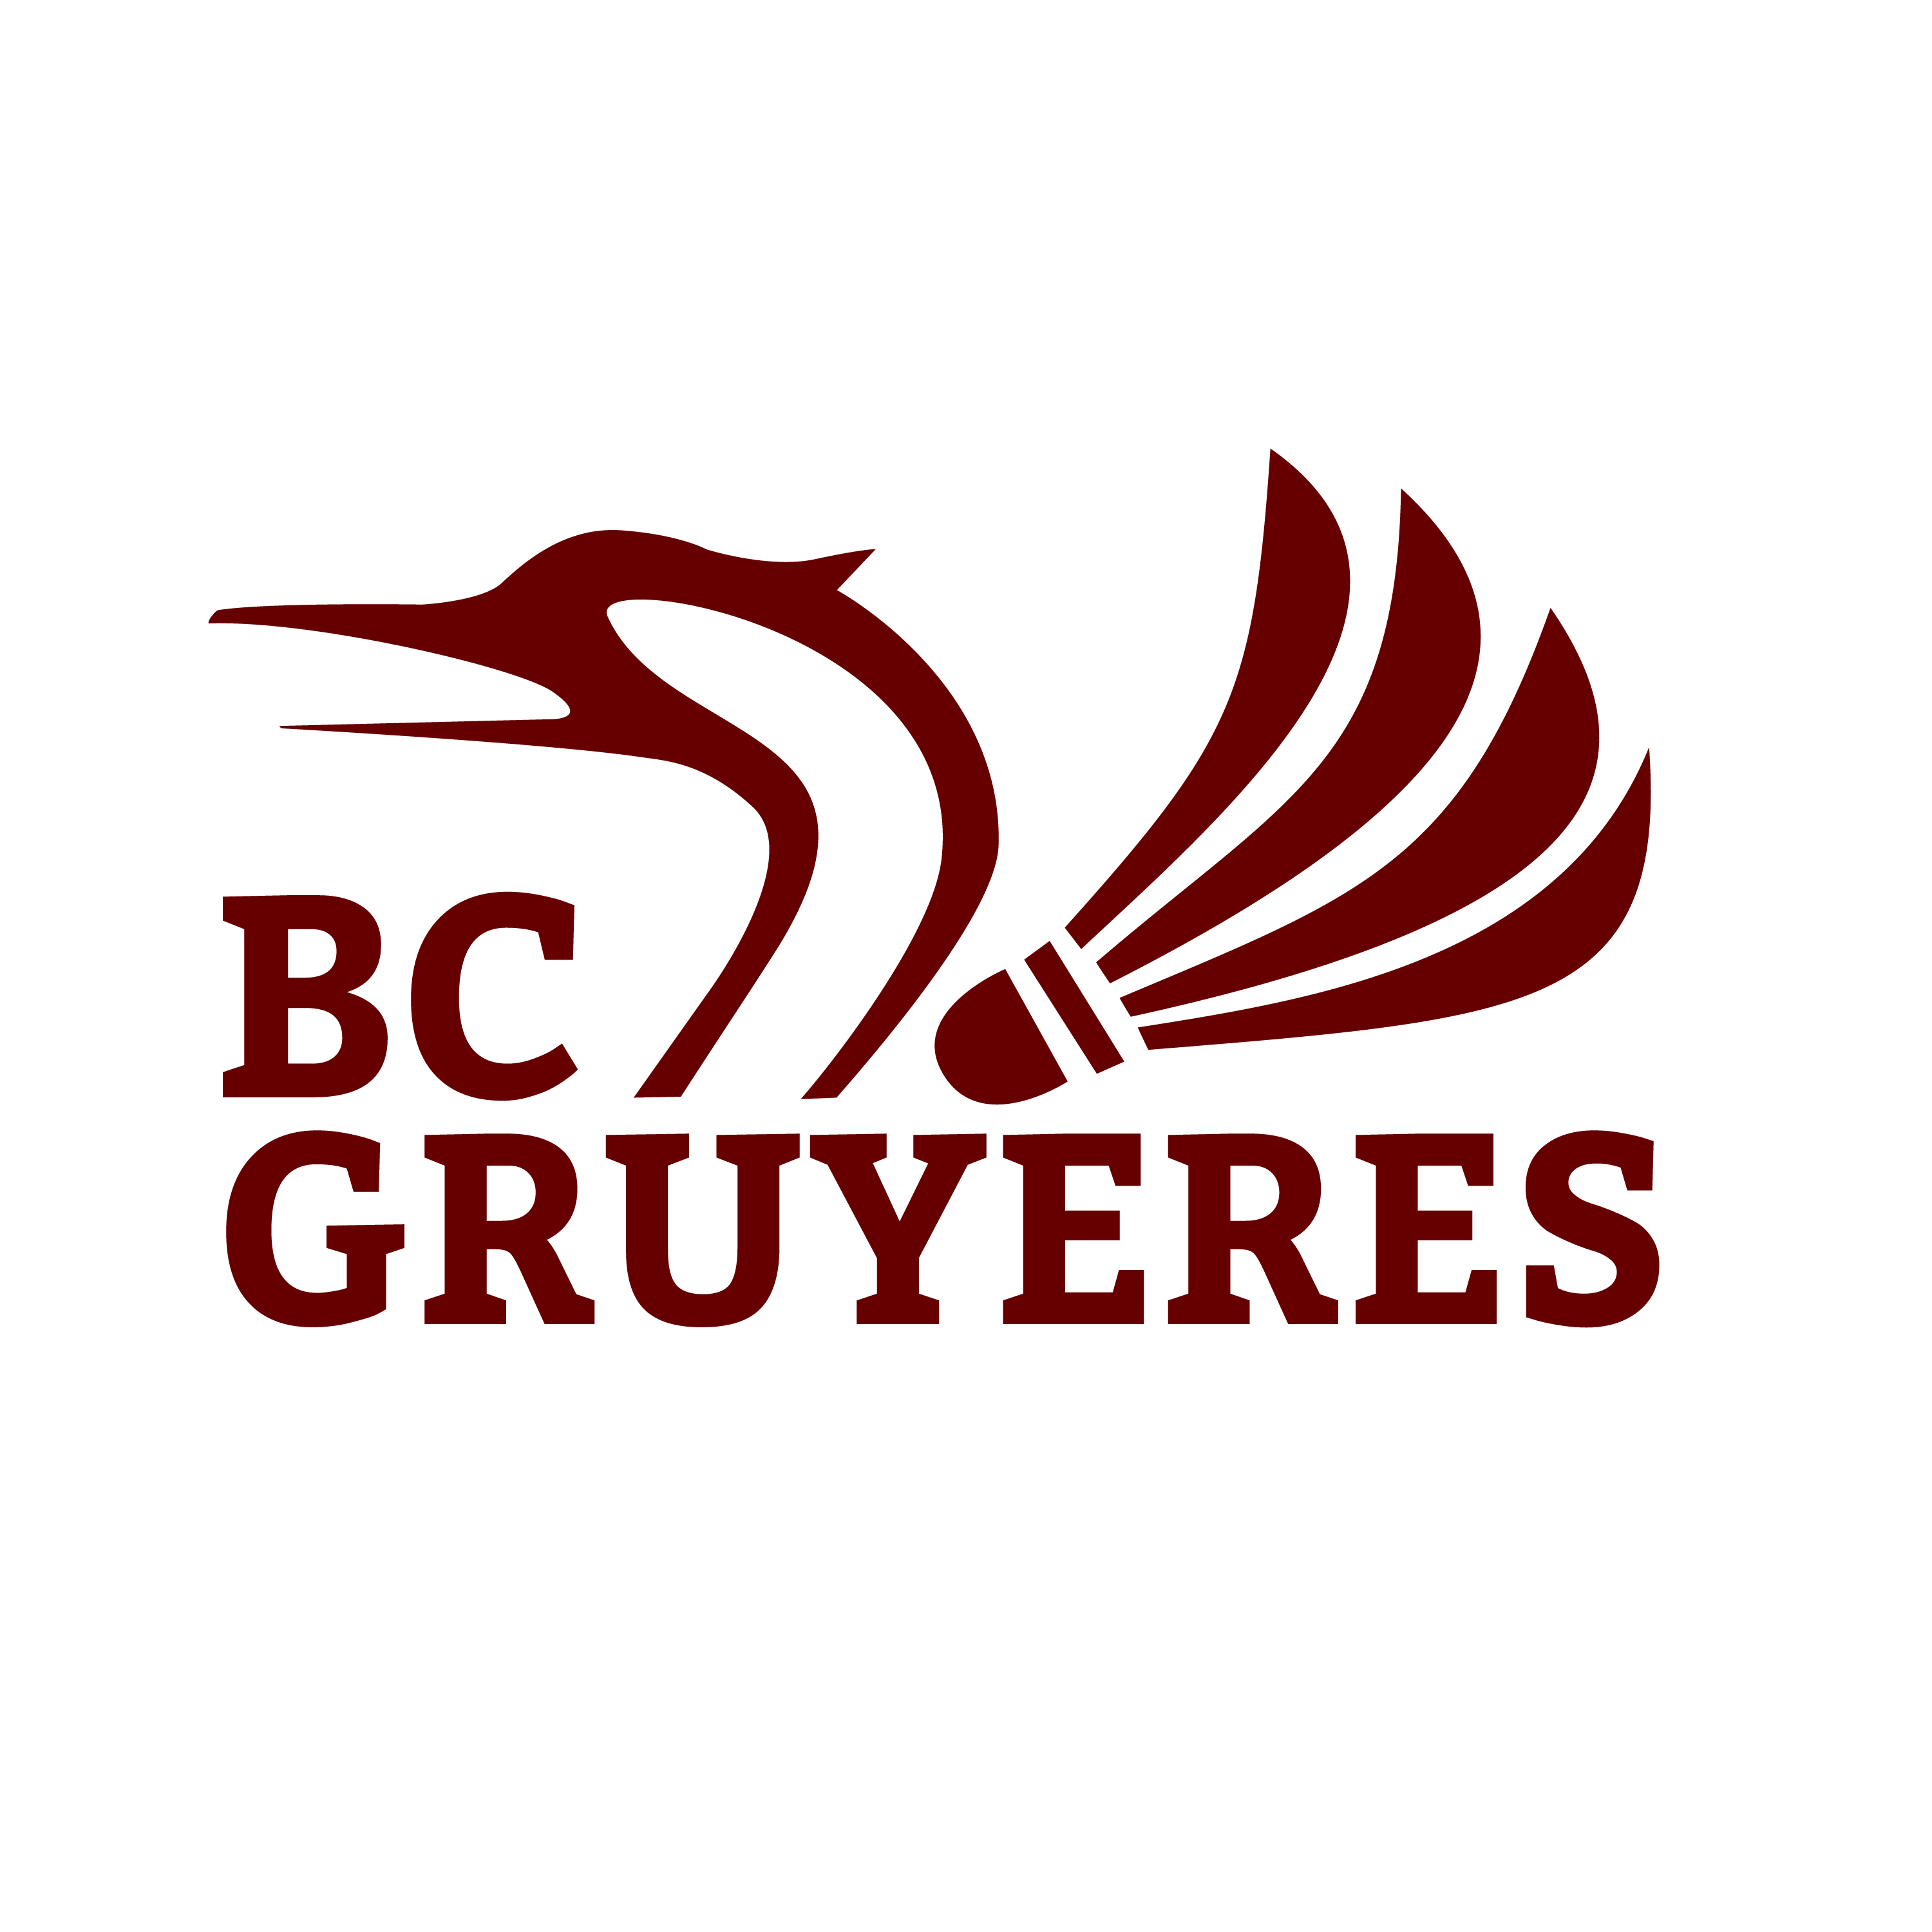 BC Gruyères